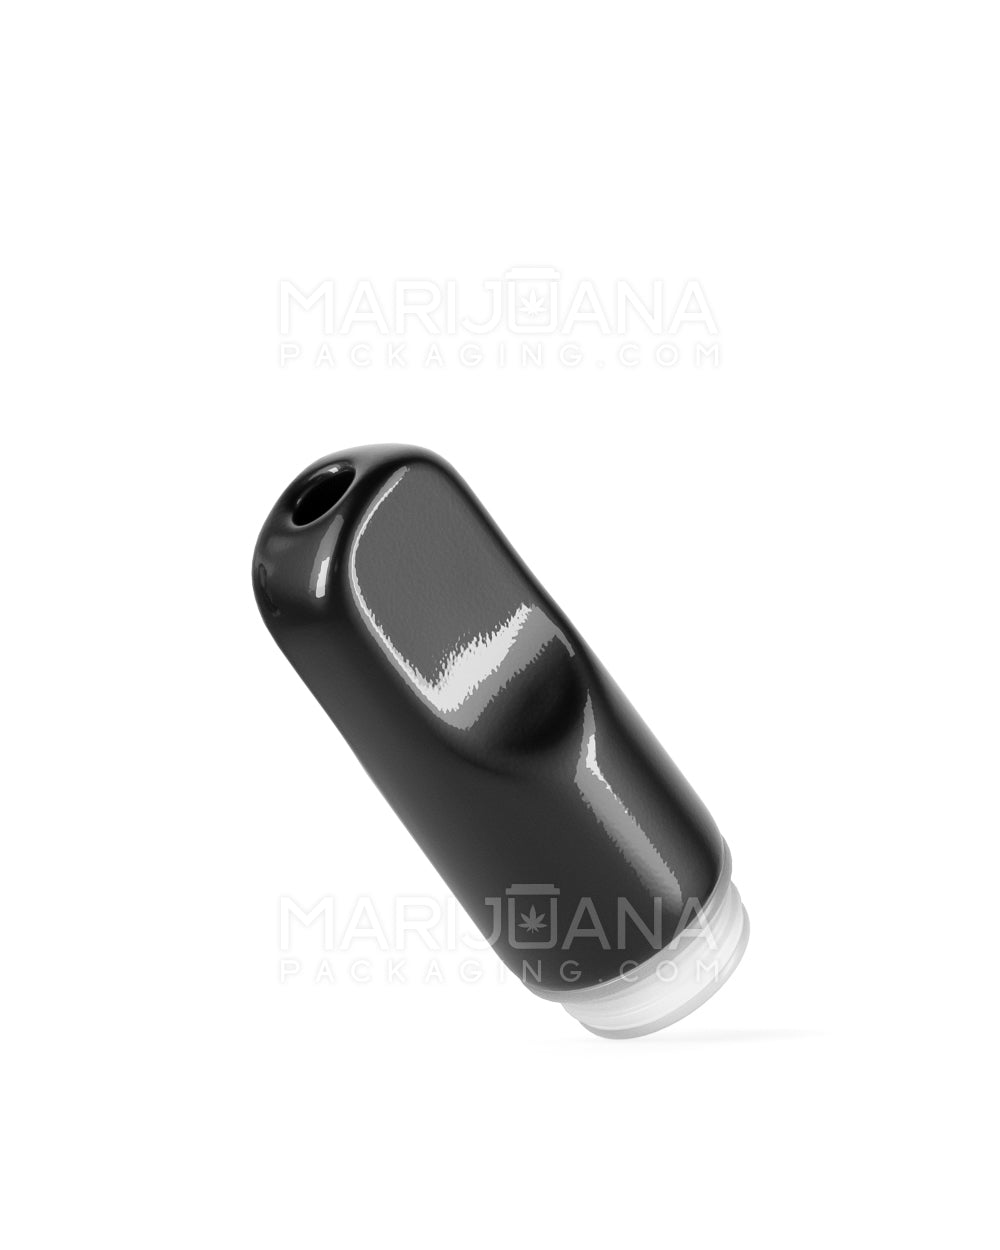 AVD | Flat Vape Mouthpiece for Glass Cartridges | Black Ceramic - Eazy Press - 600 Count - 4